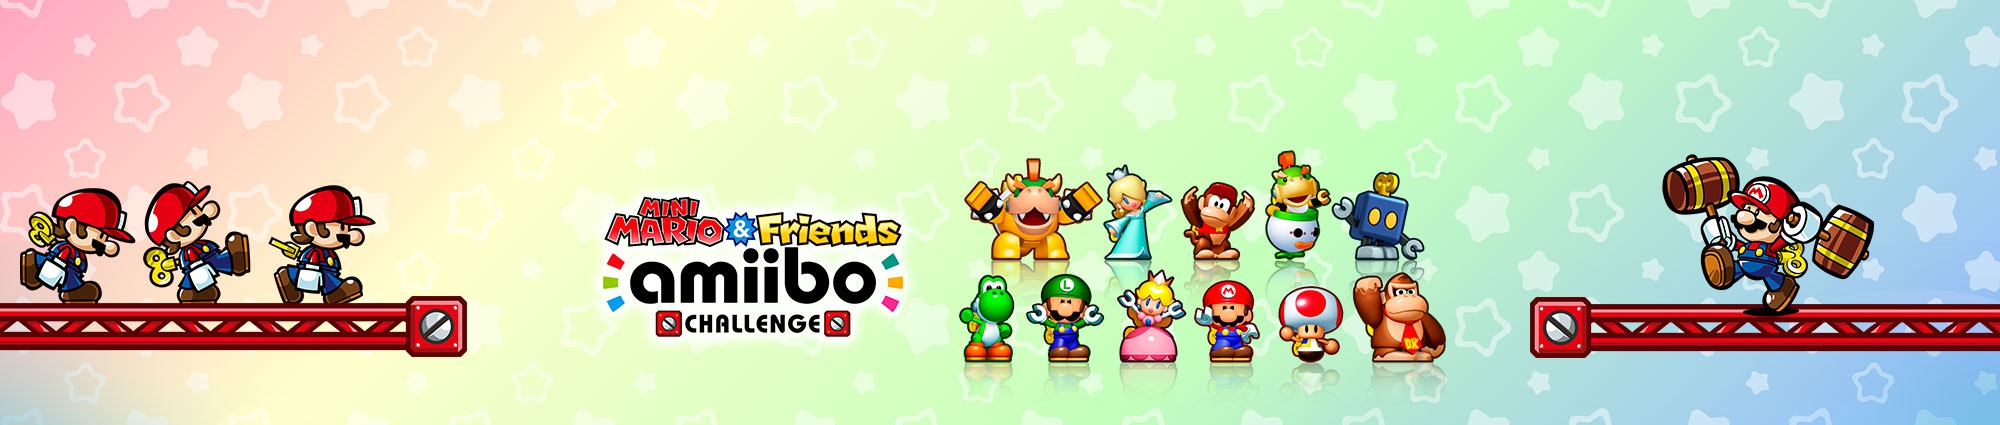 Banner Mini Mario and Friends amiibo Challenge